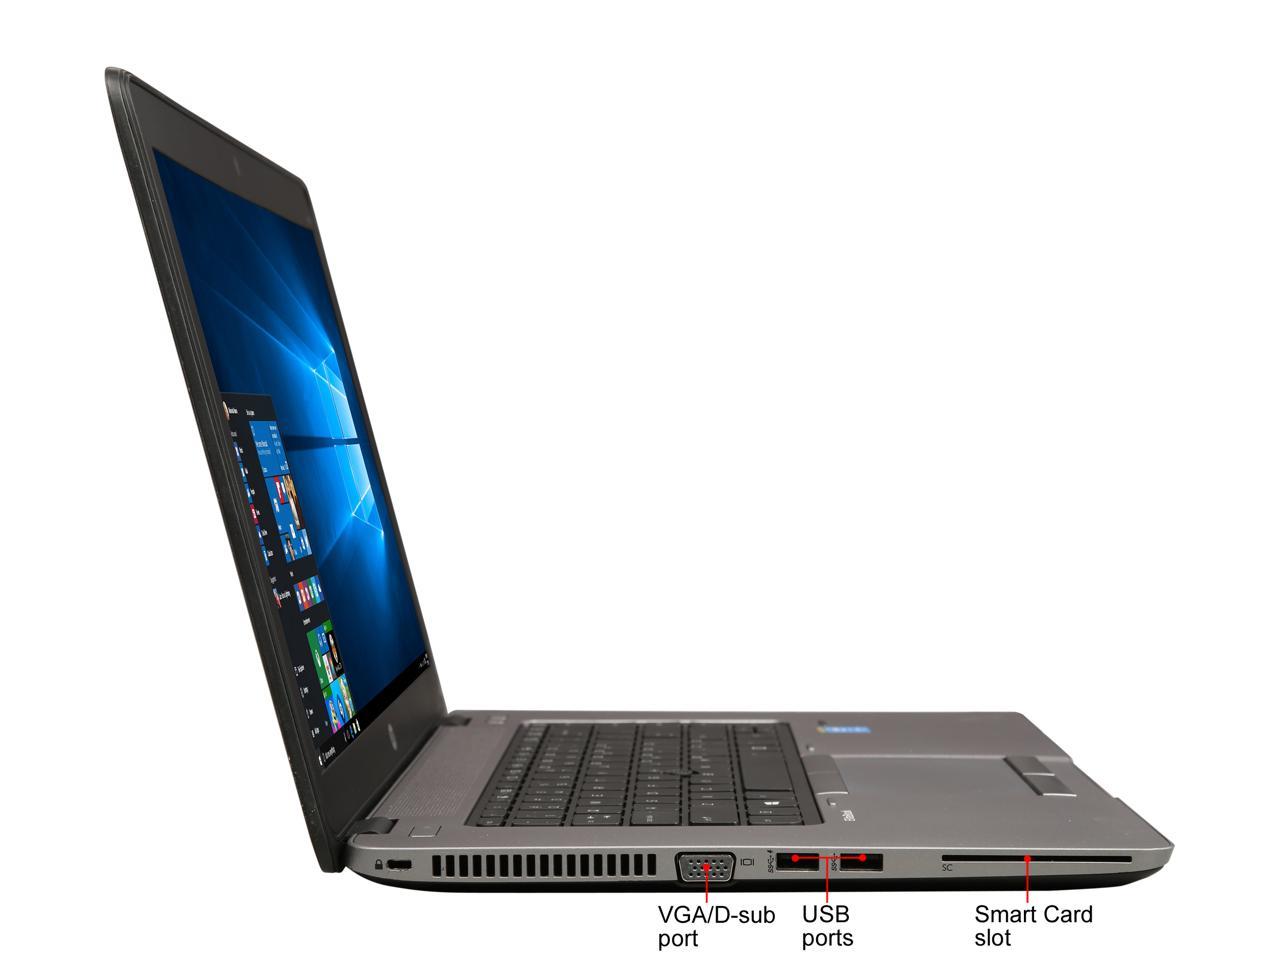 HP Elitebook 850 G1 15.6 Intel Core i5-4300U 1.90Ghz 4GB 256GB Webcam Windows 10 Pro